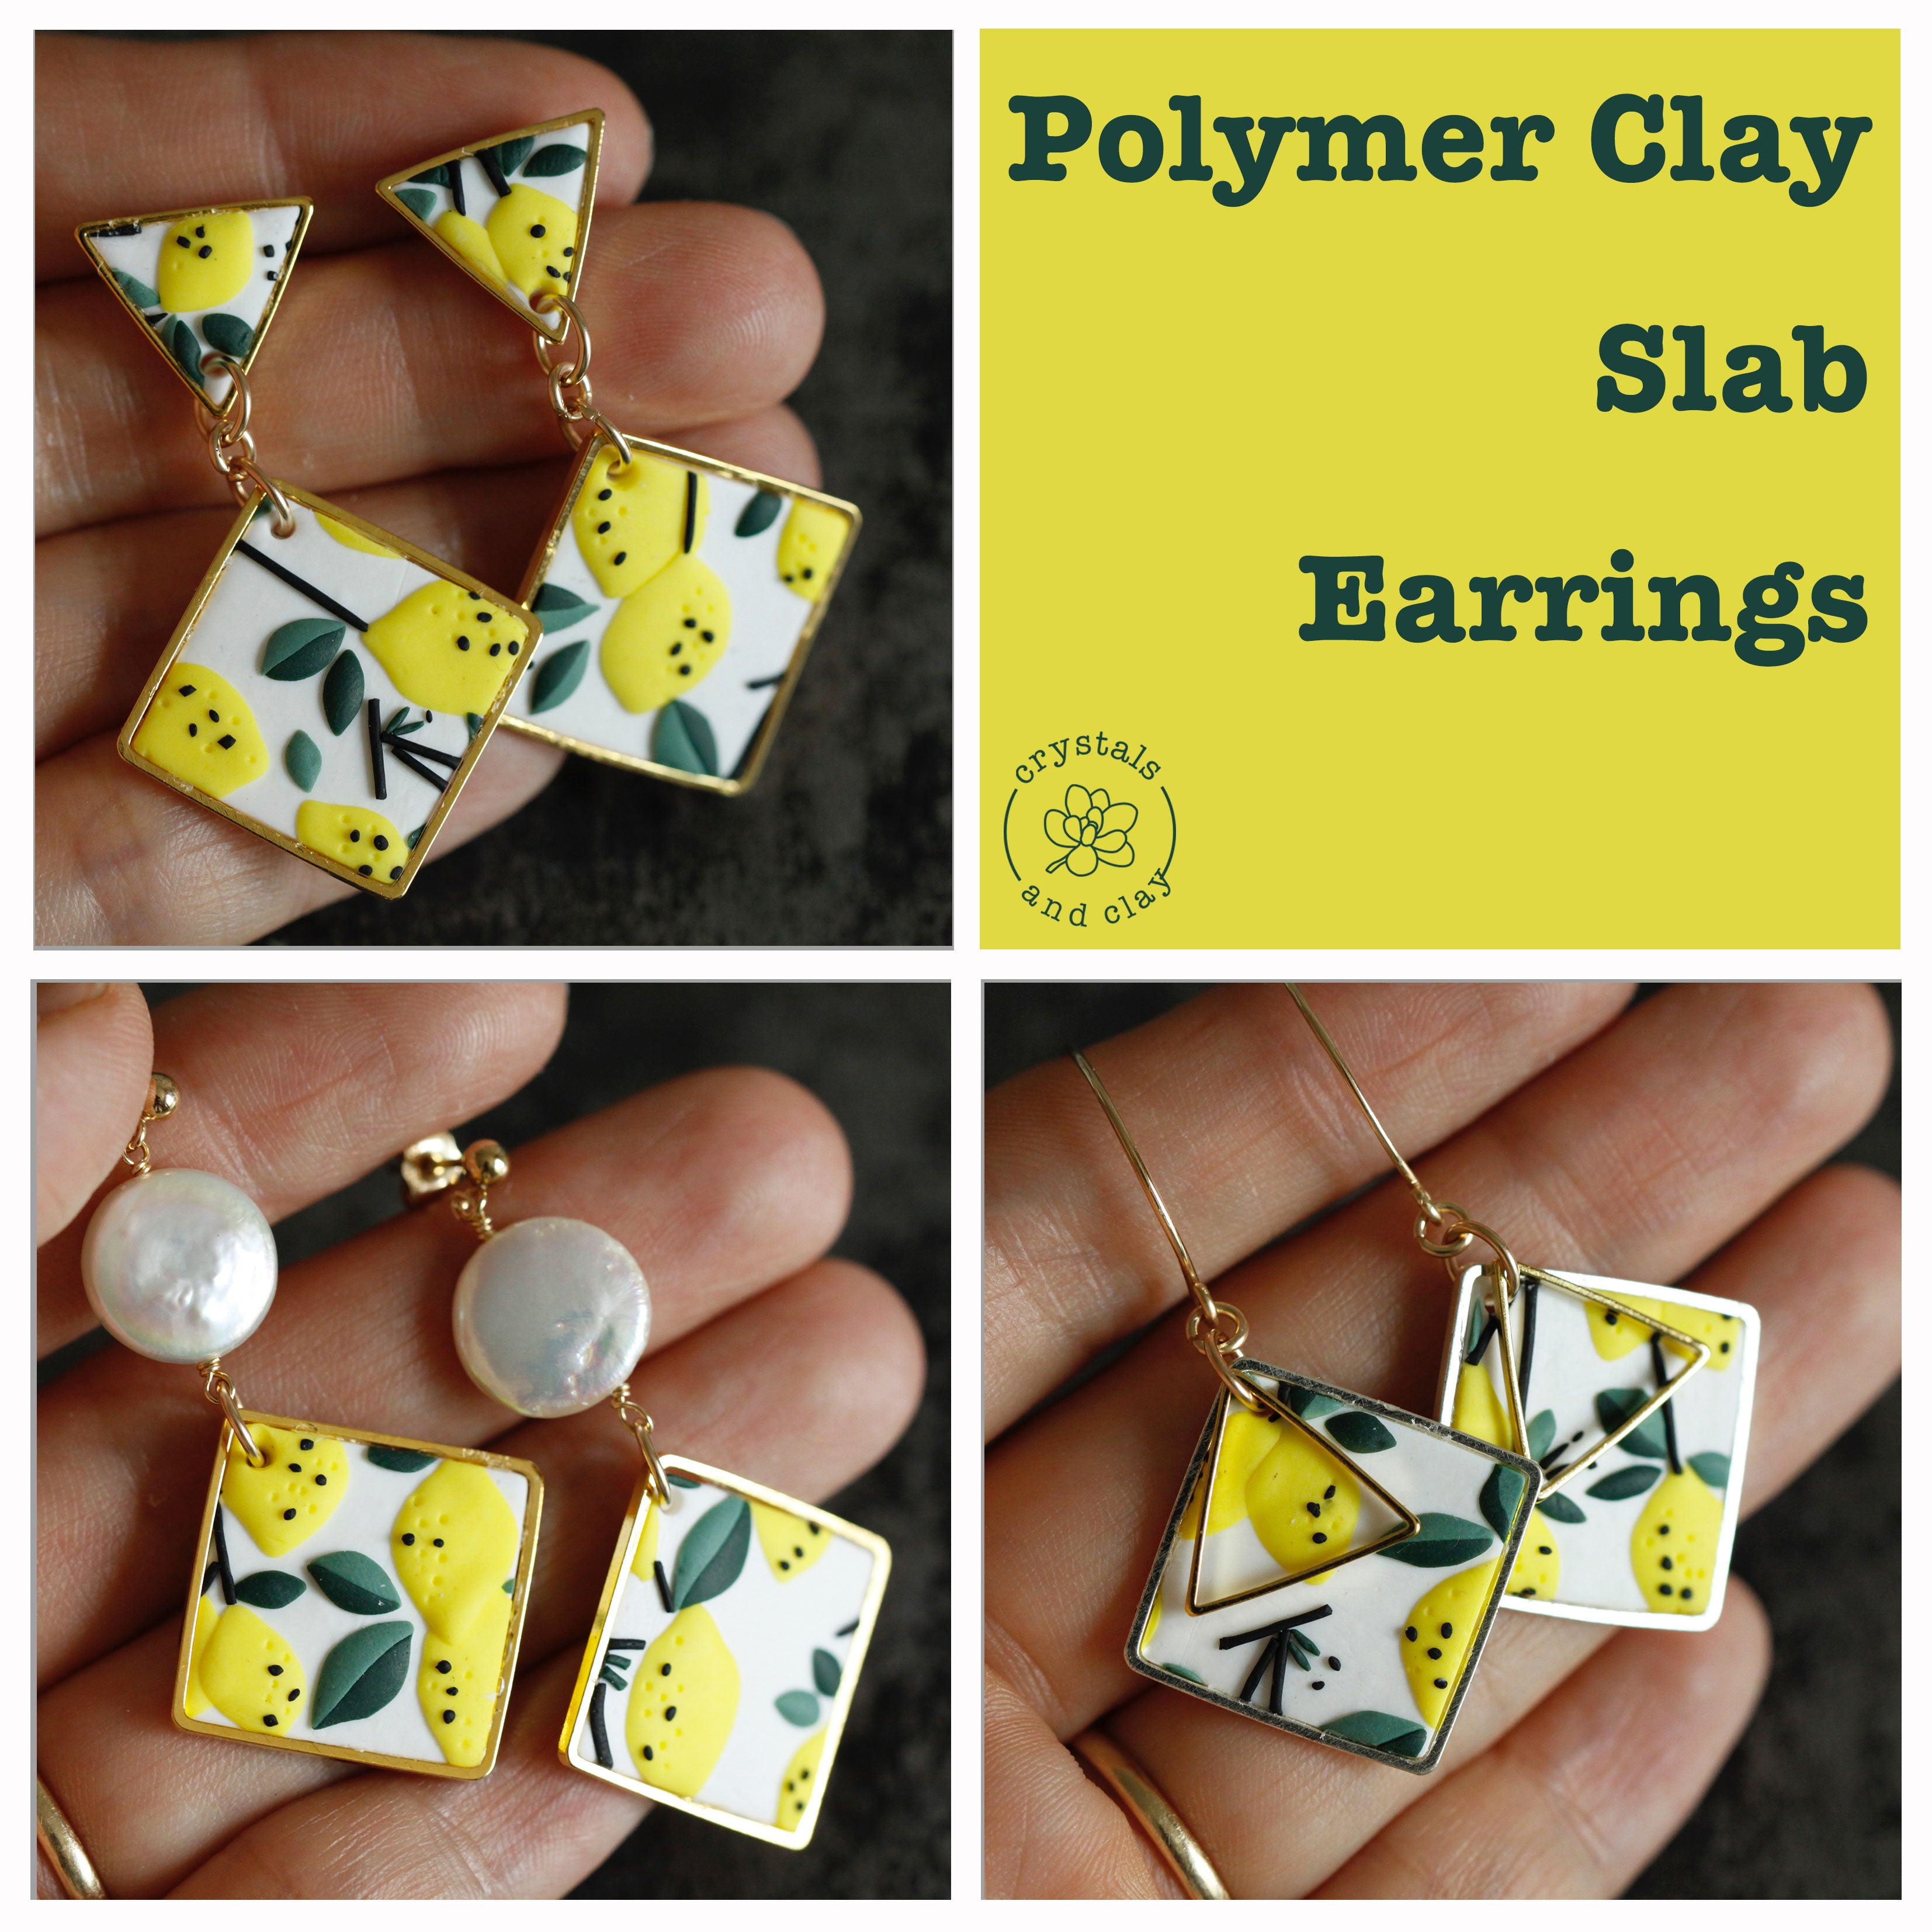 300 Polymer Clay Jewelry - Earrings ideas  polymer clay jewelry, clay  jewelry, polymer clay earrings